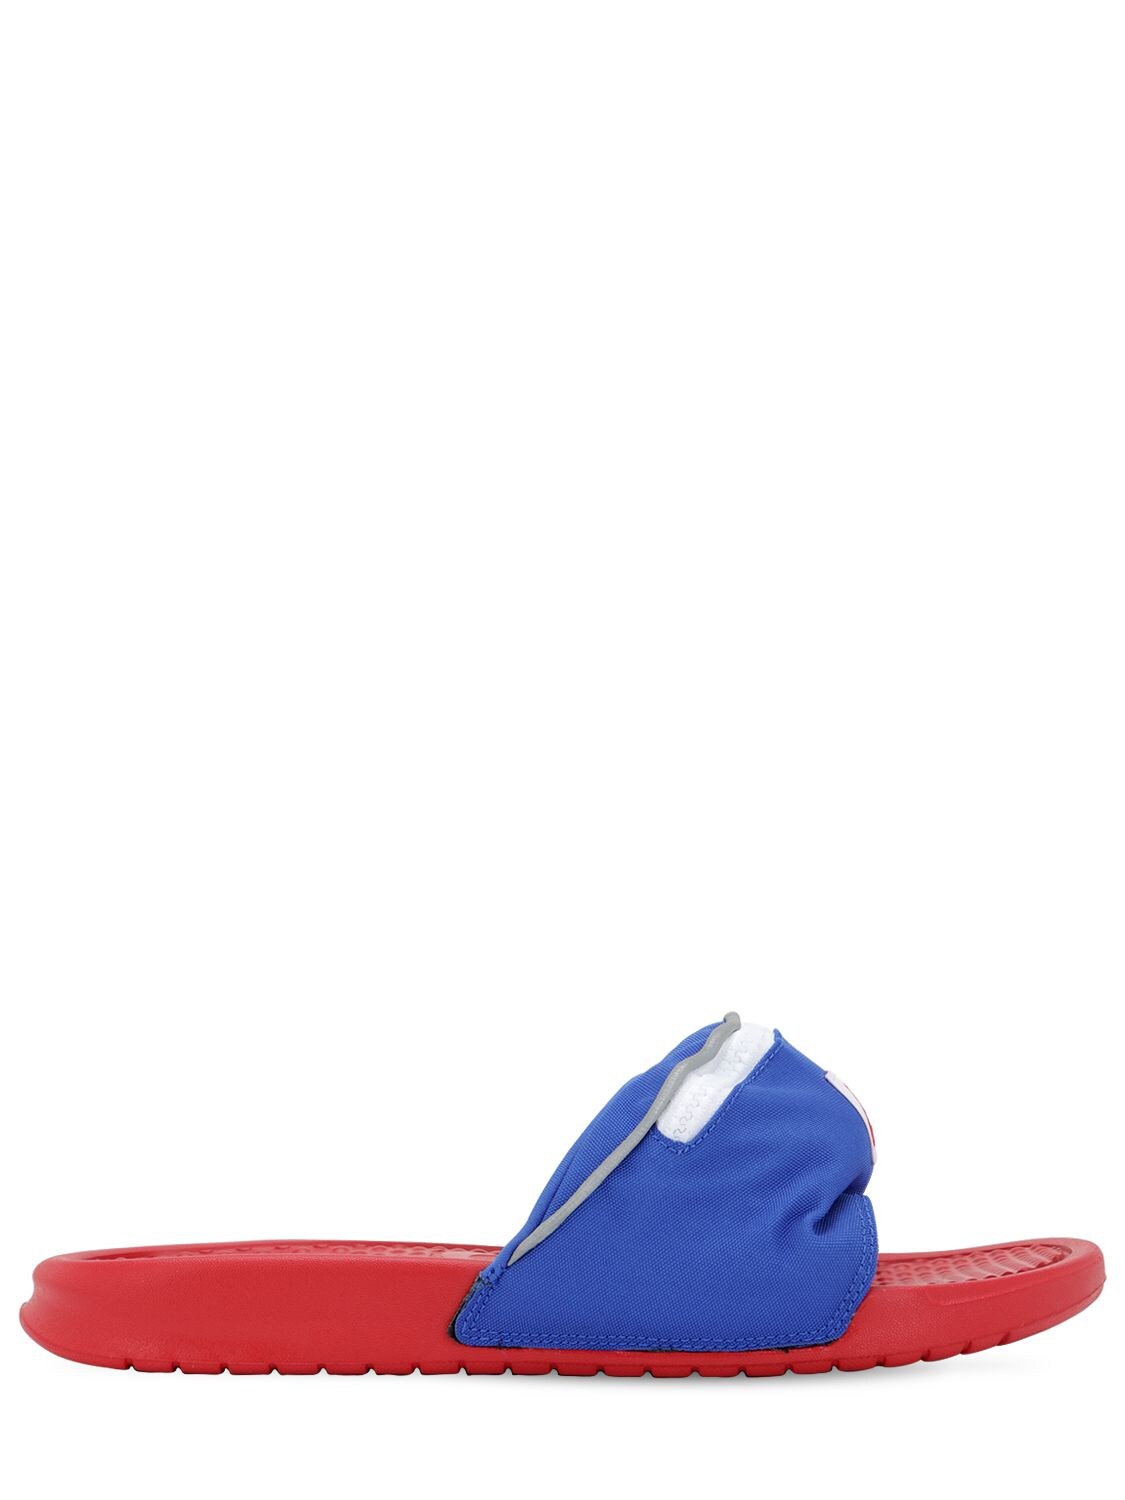 Nike Benassi Jdi Slide Sandals In Blue,red